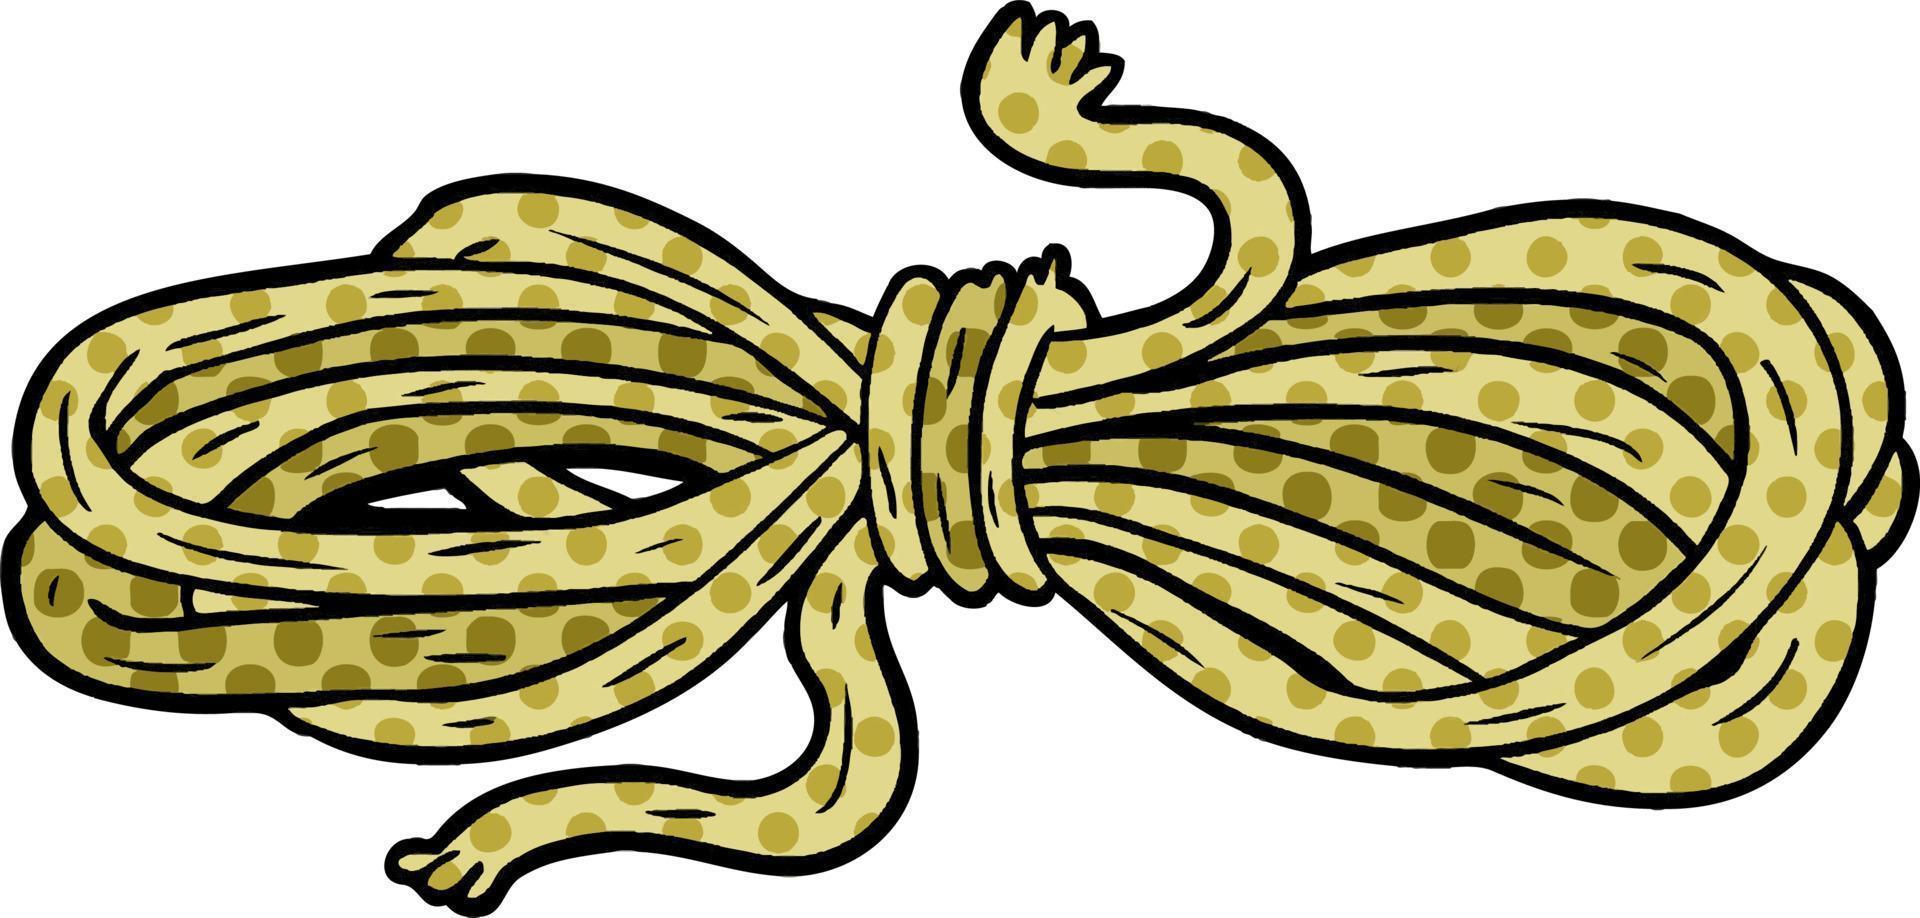 corde brune de dessin animé vecteur